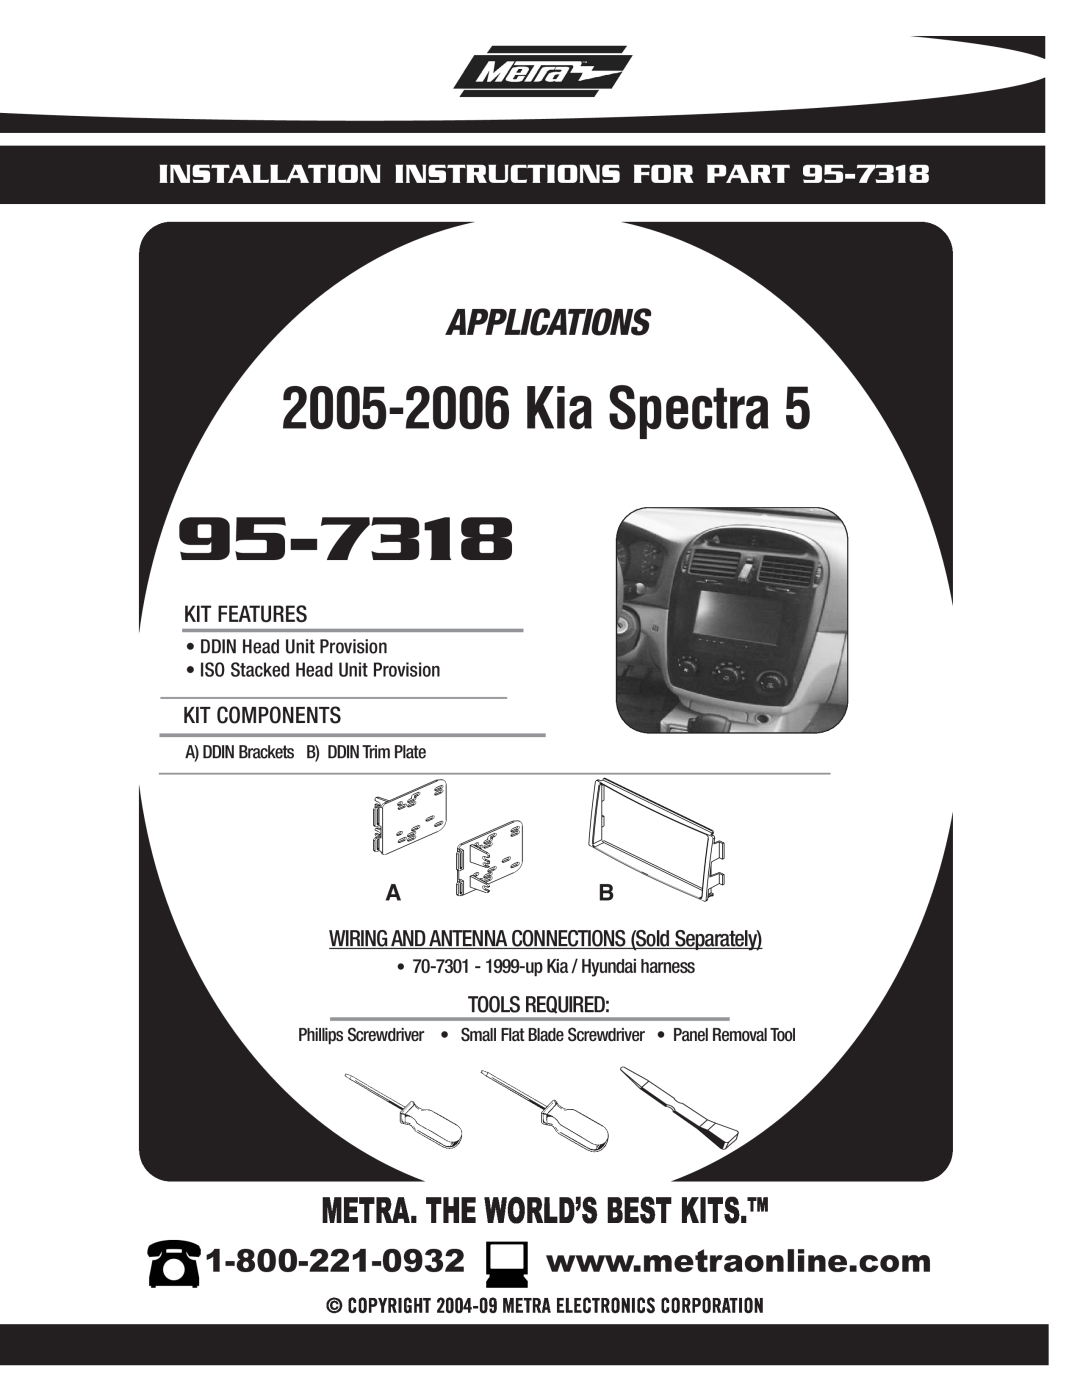 Metra Electronics 95-7318 installation instructions Kia Spectra, Applications, Metra. The World’S Best Kits 